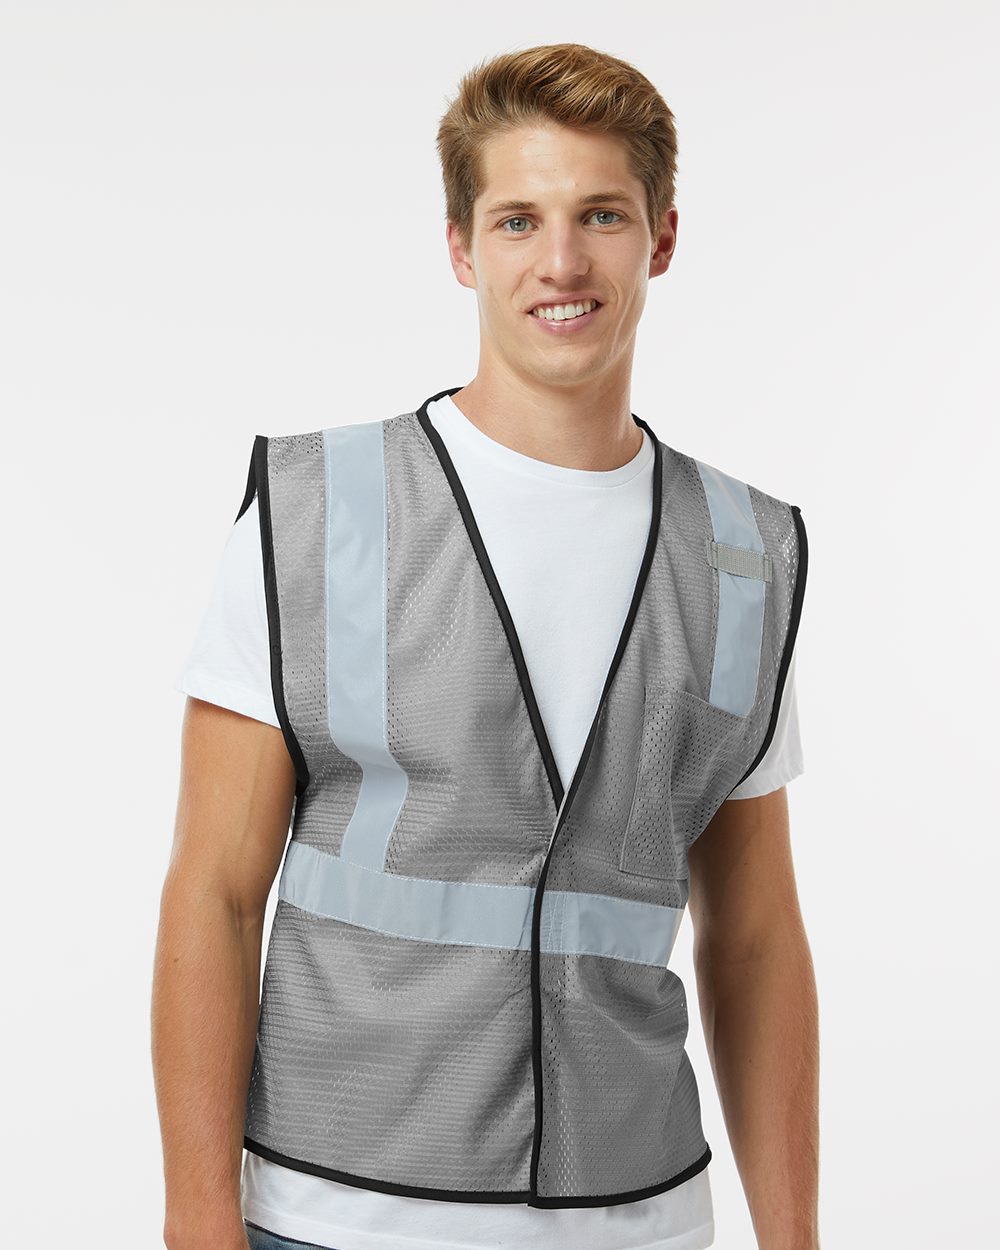 ml Kishigo Men's Enhanced Visibility Professional Utility Vest